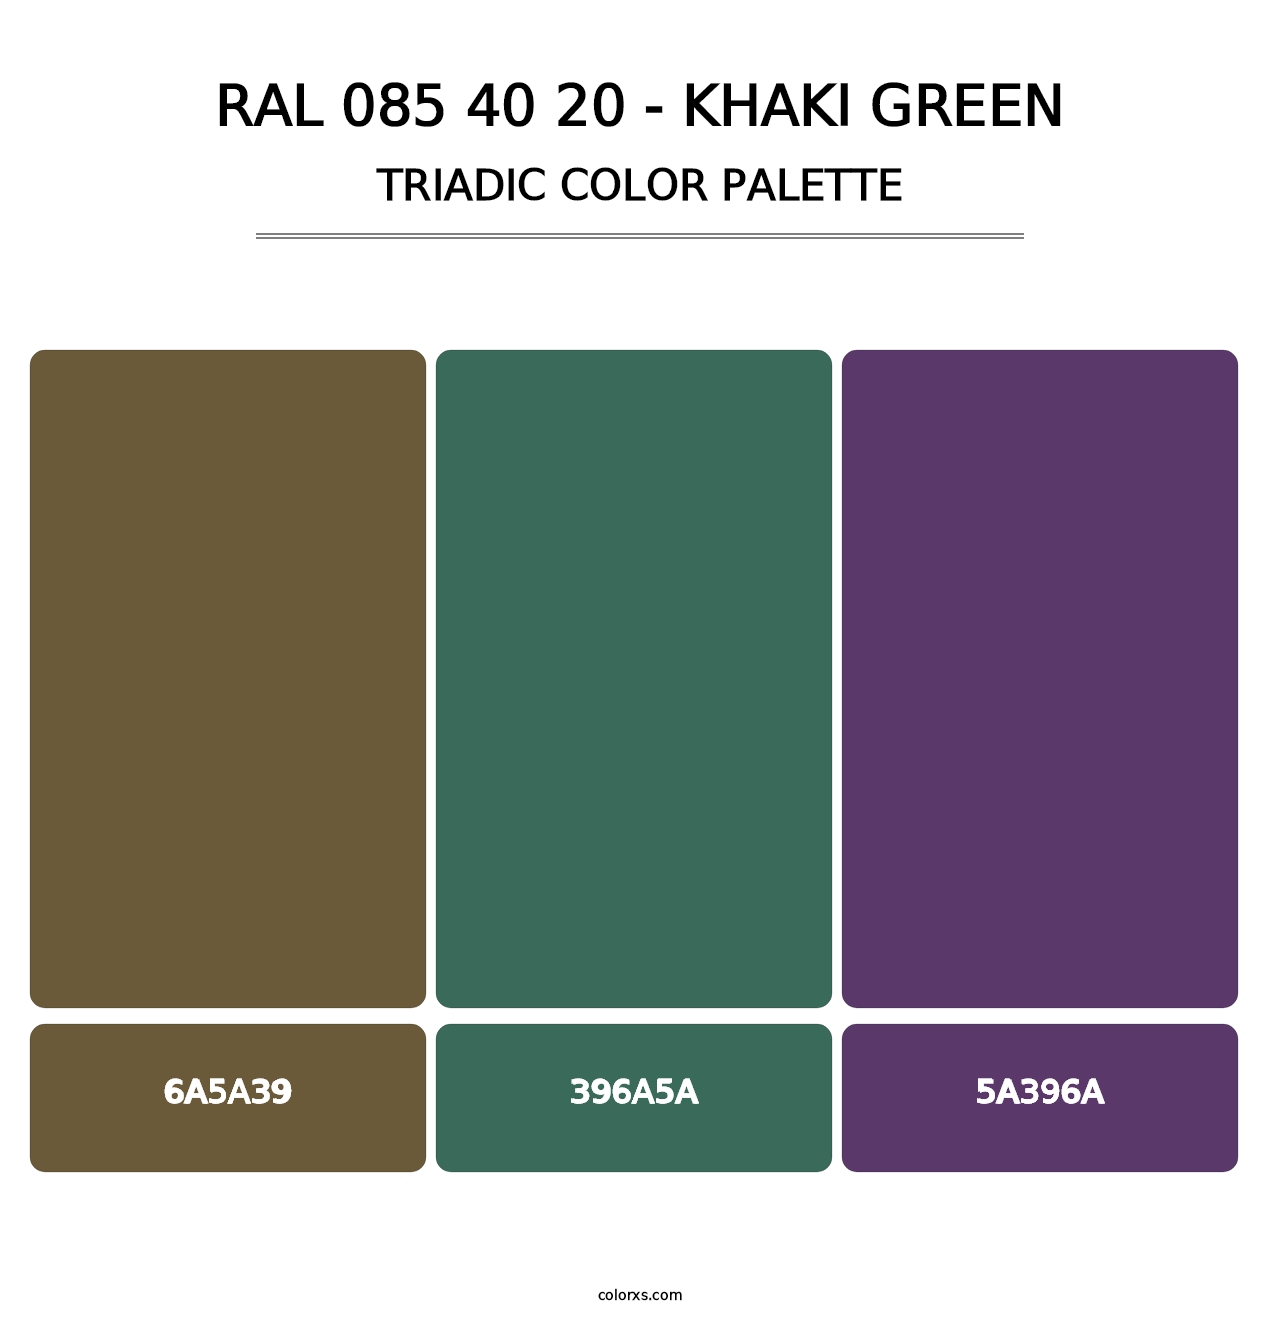 RAL 085 40 20 - Khaki Green - Triadic Color Palette